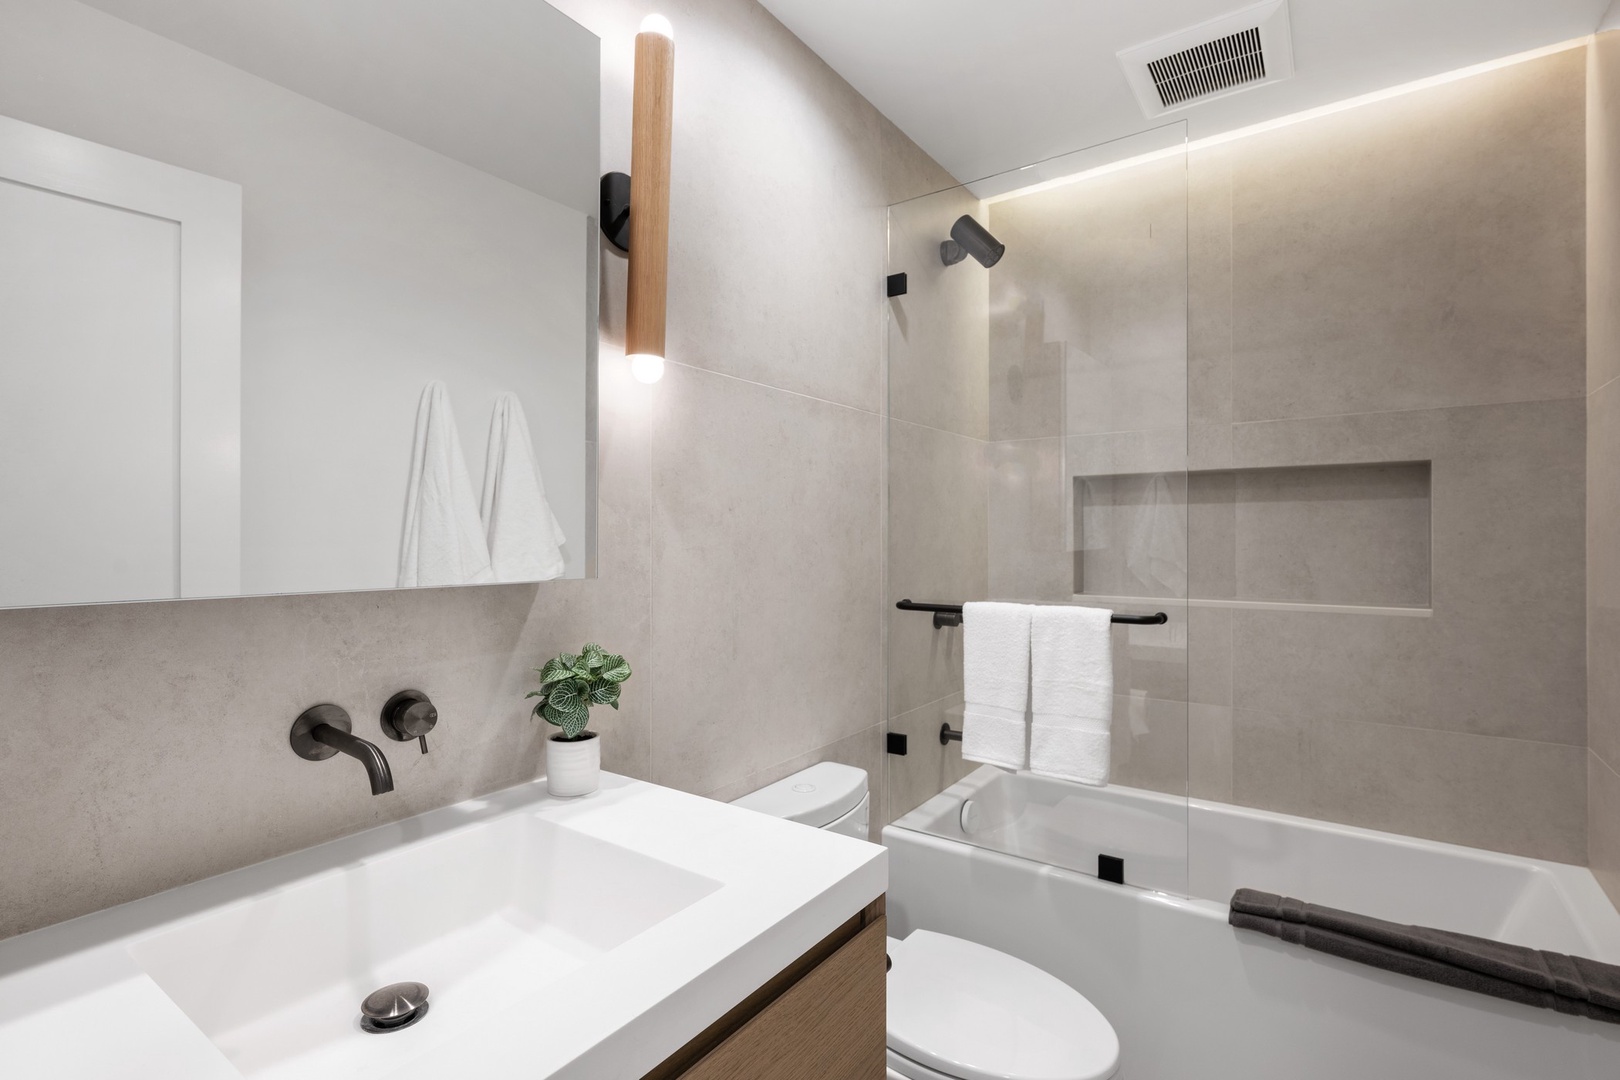 Hall bathroom with tub/shower combo